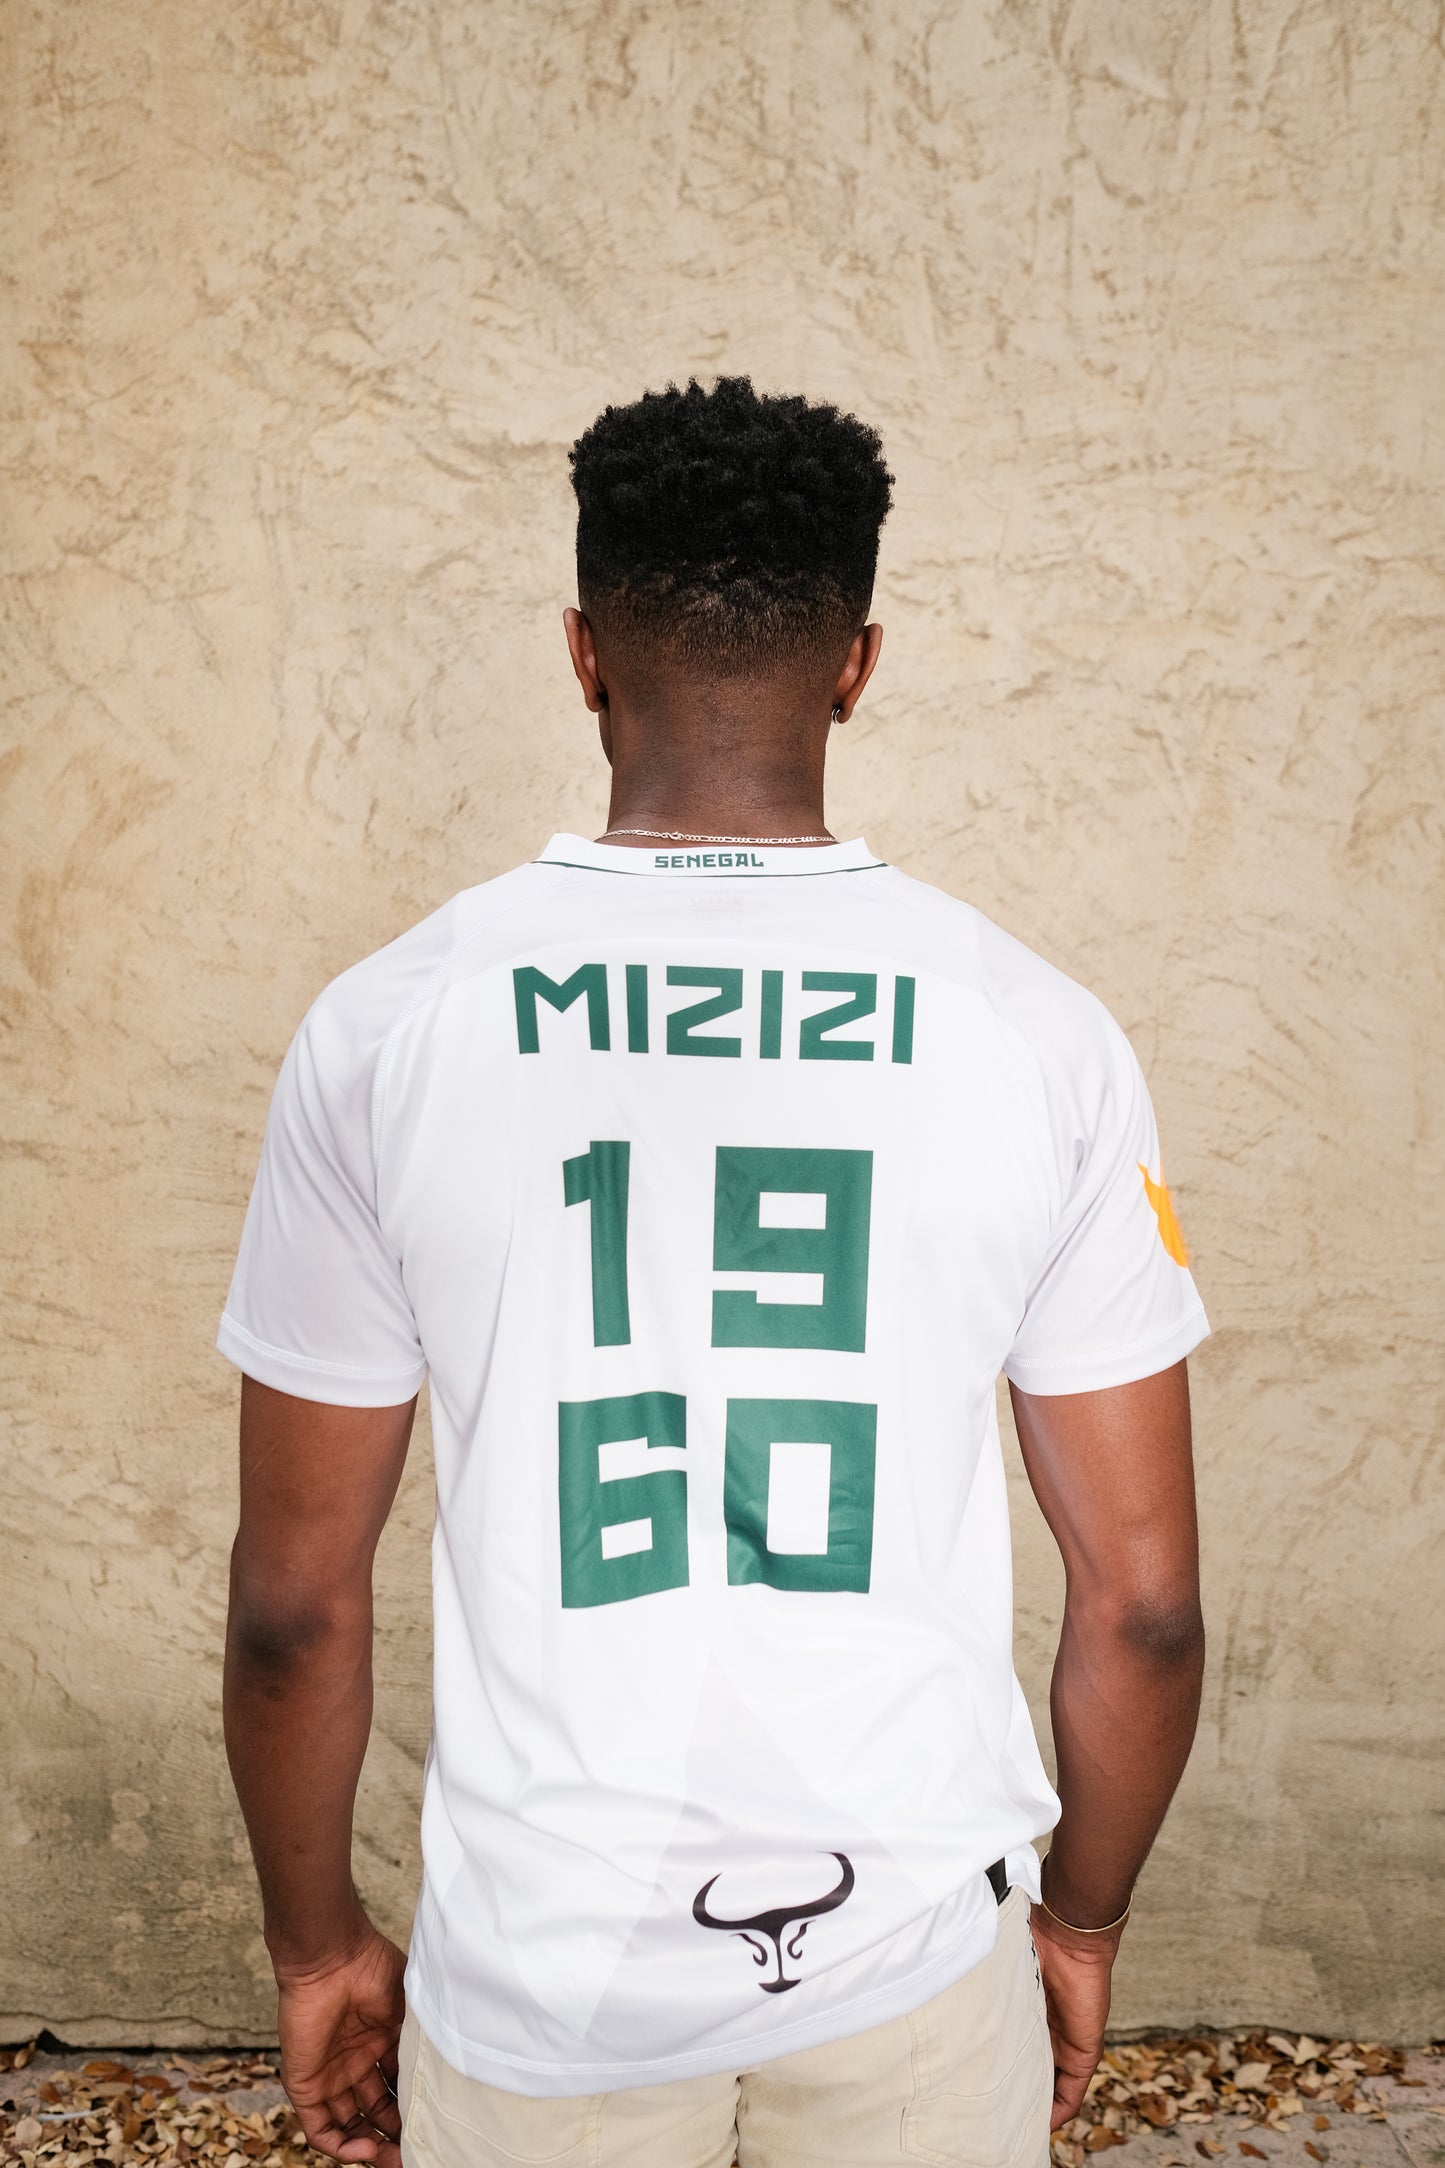 
                  
                    Senegal Soccer Jersey - MIZIZI
                  
                